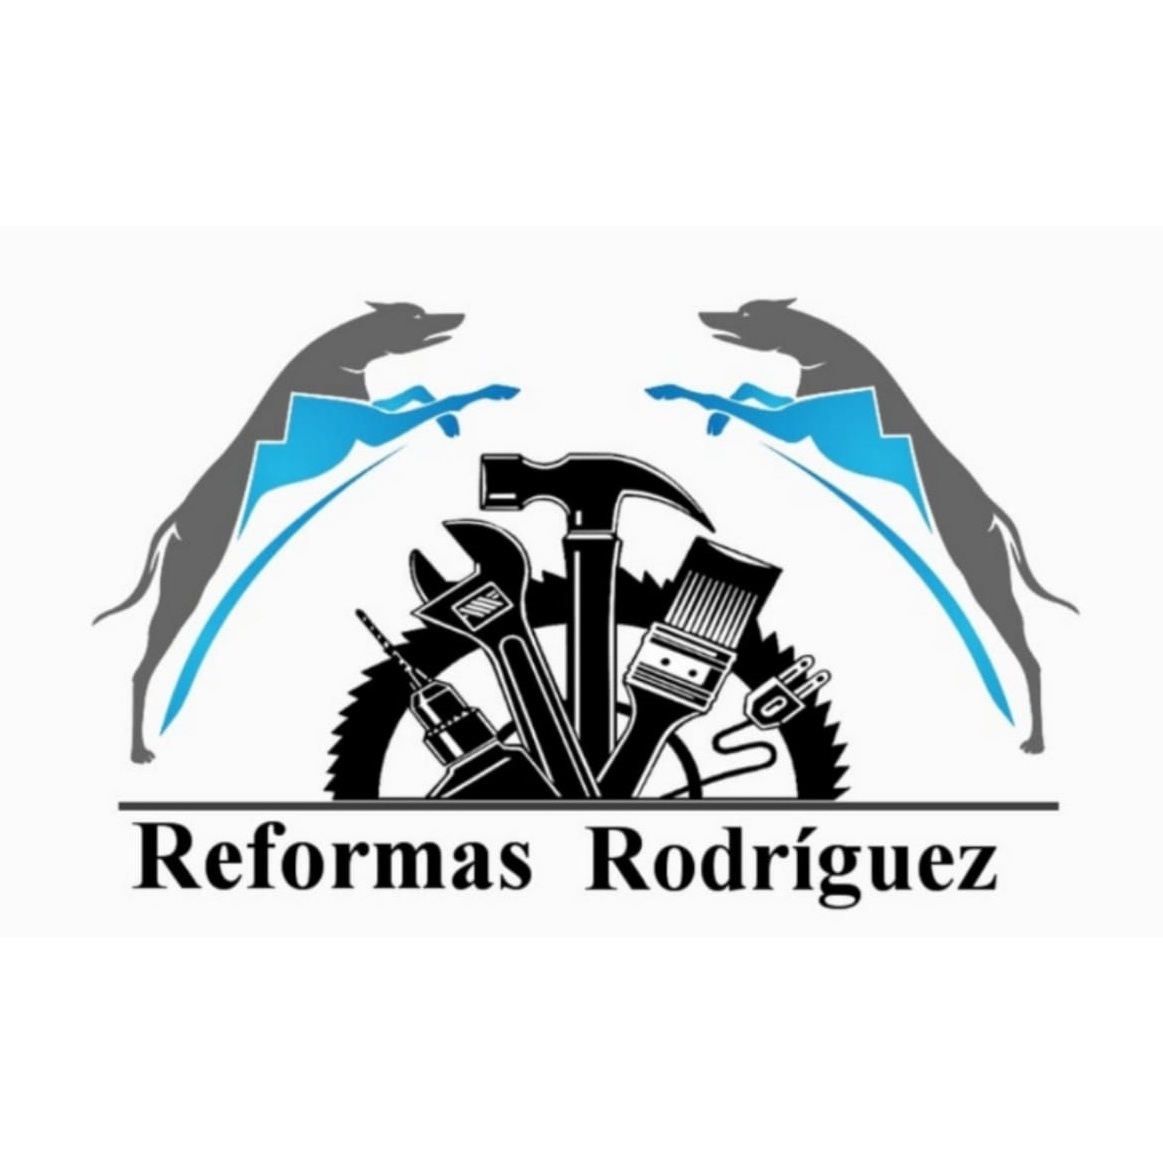 Reformas Rodriguez